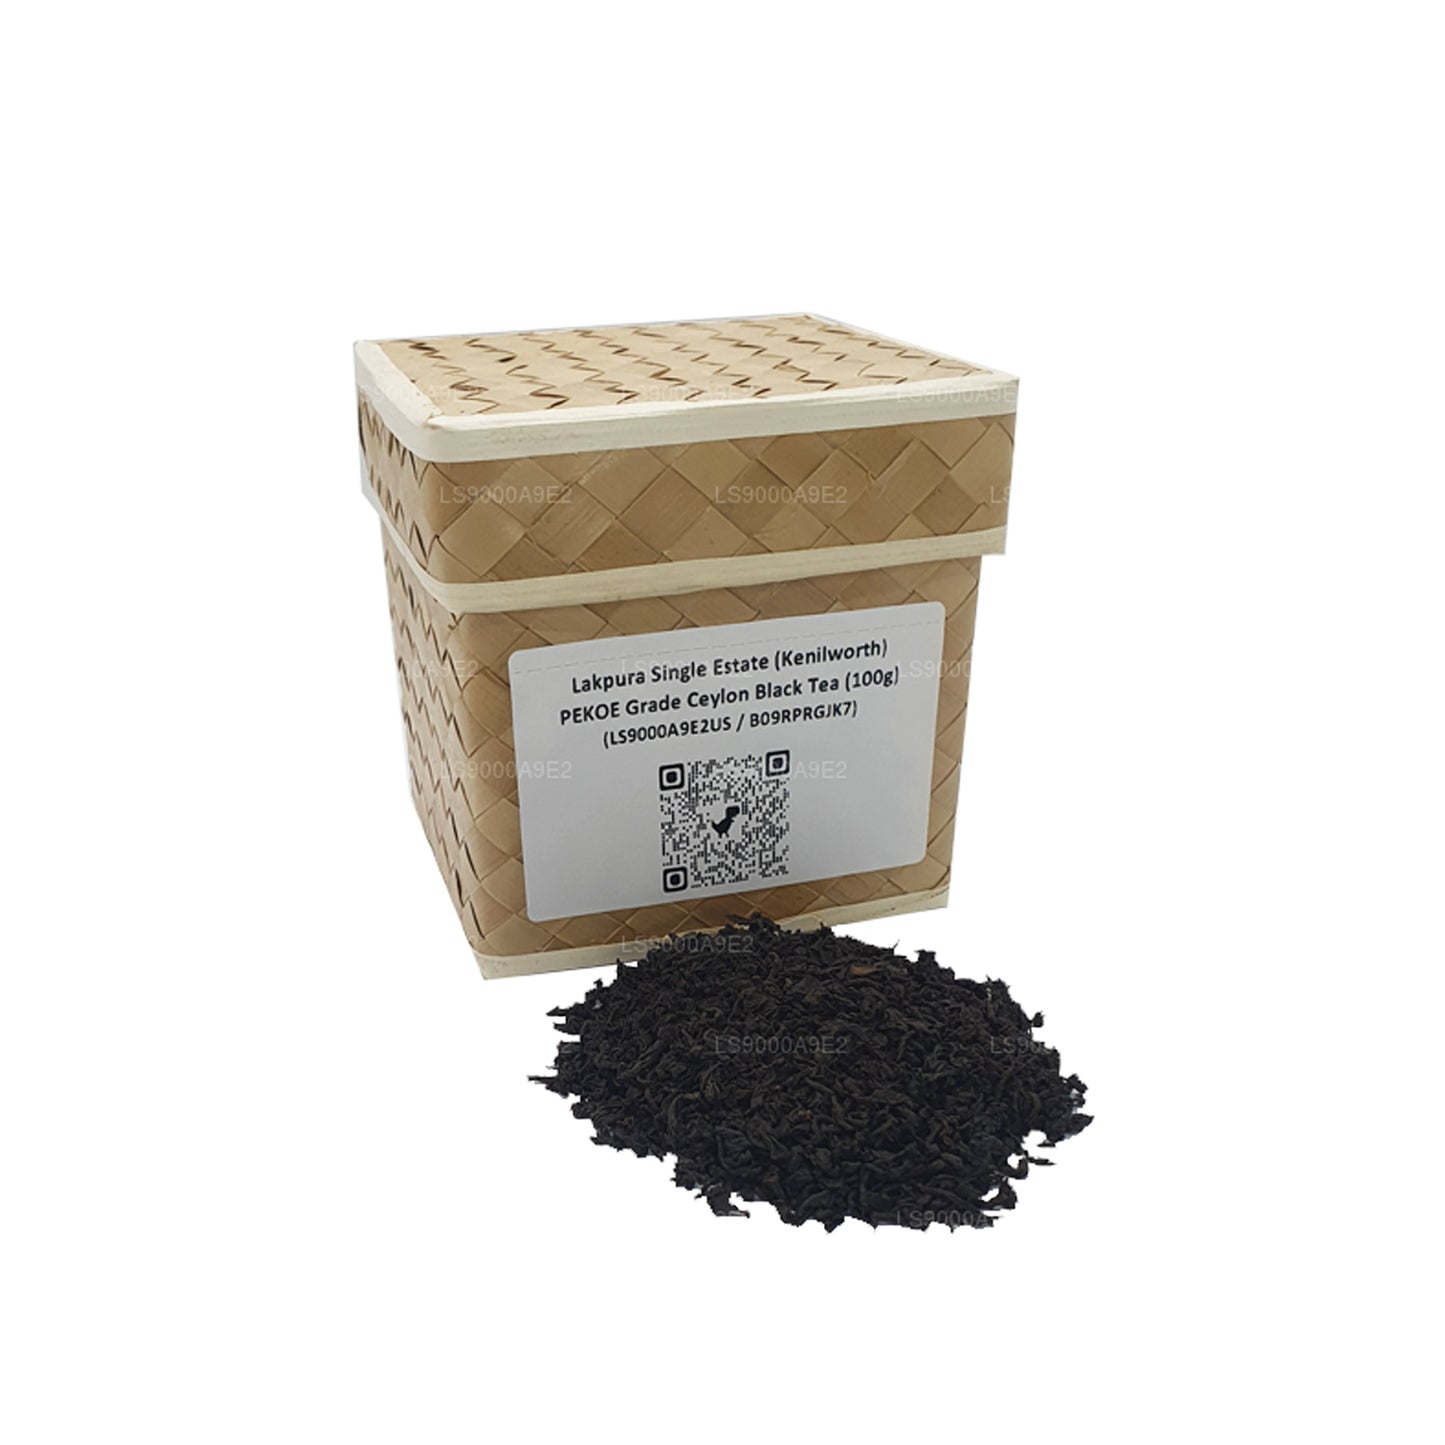 Tè nero di Ceylon Lakpura Single Estate (Kenilworth) di grado PEKOE (100 g)